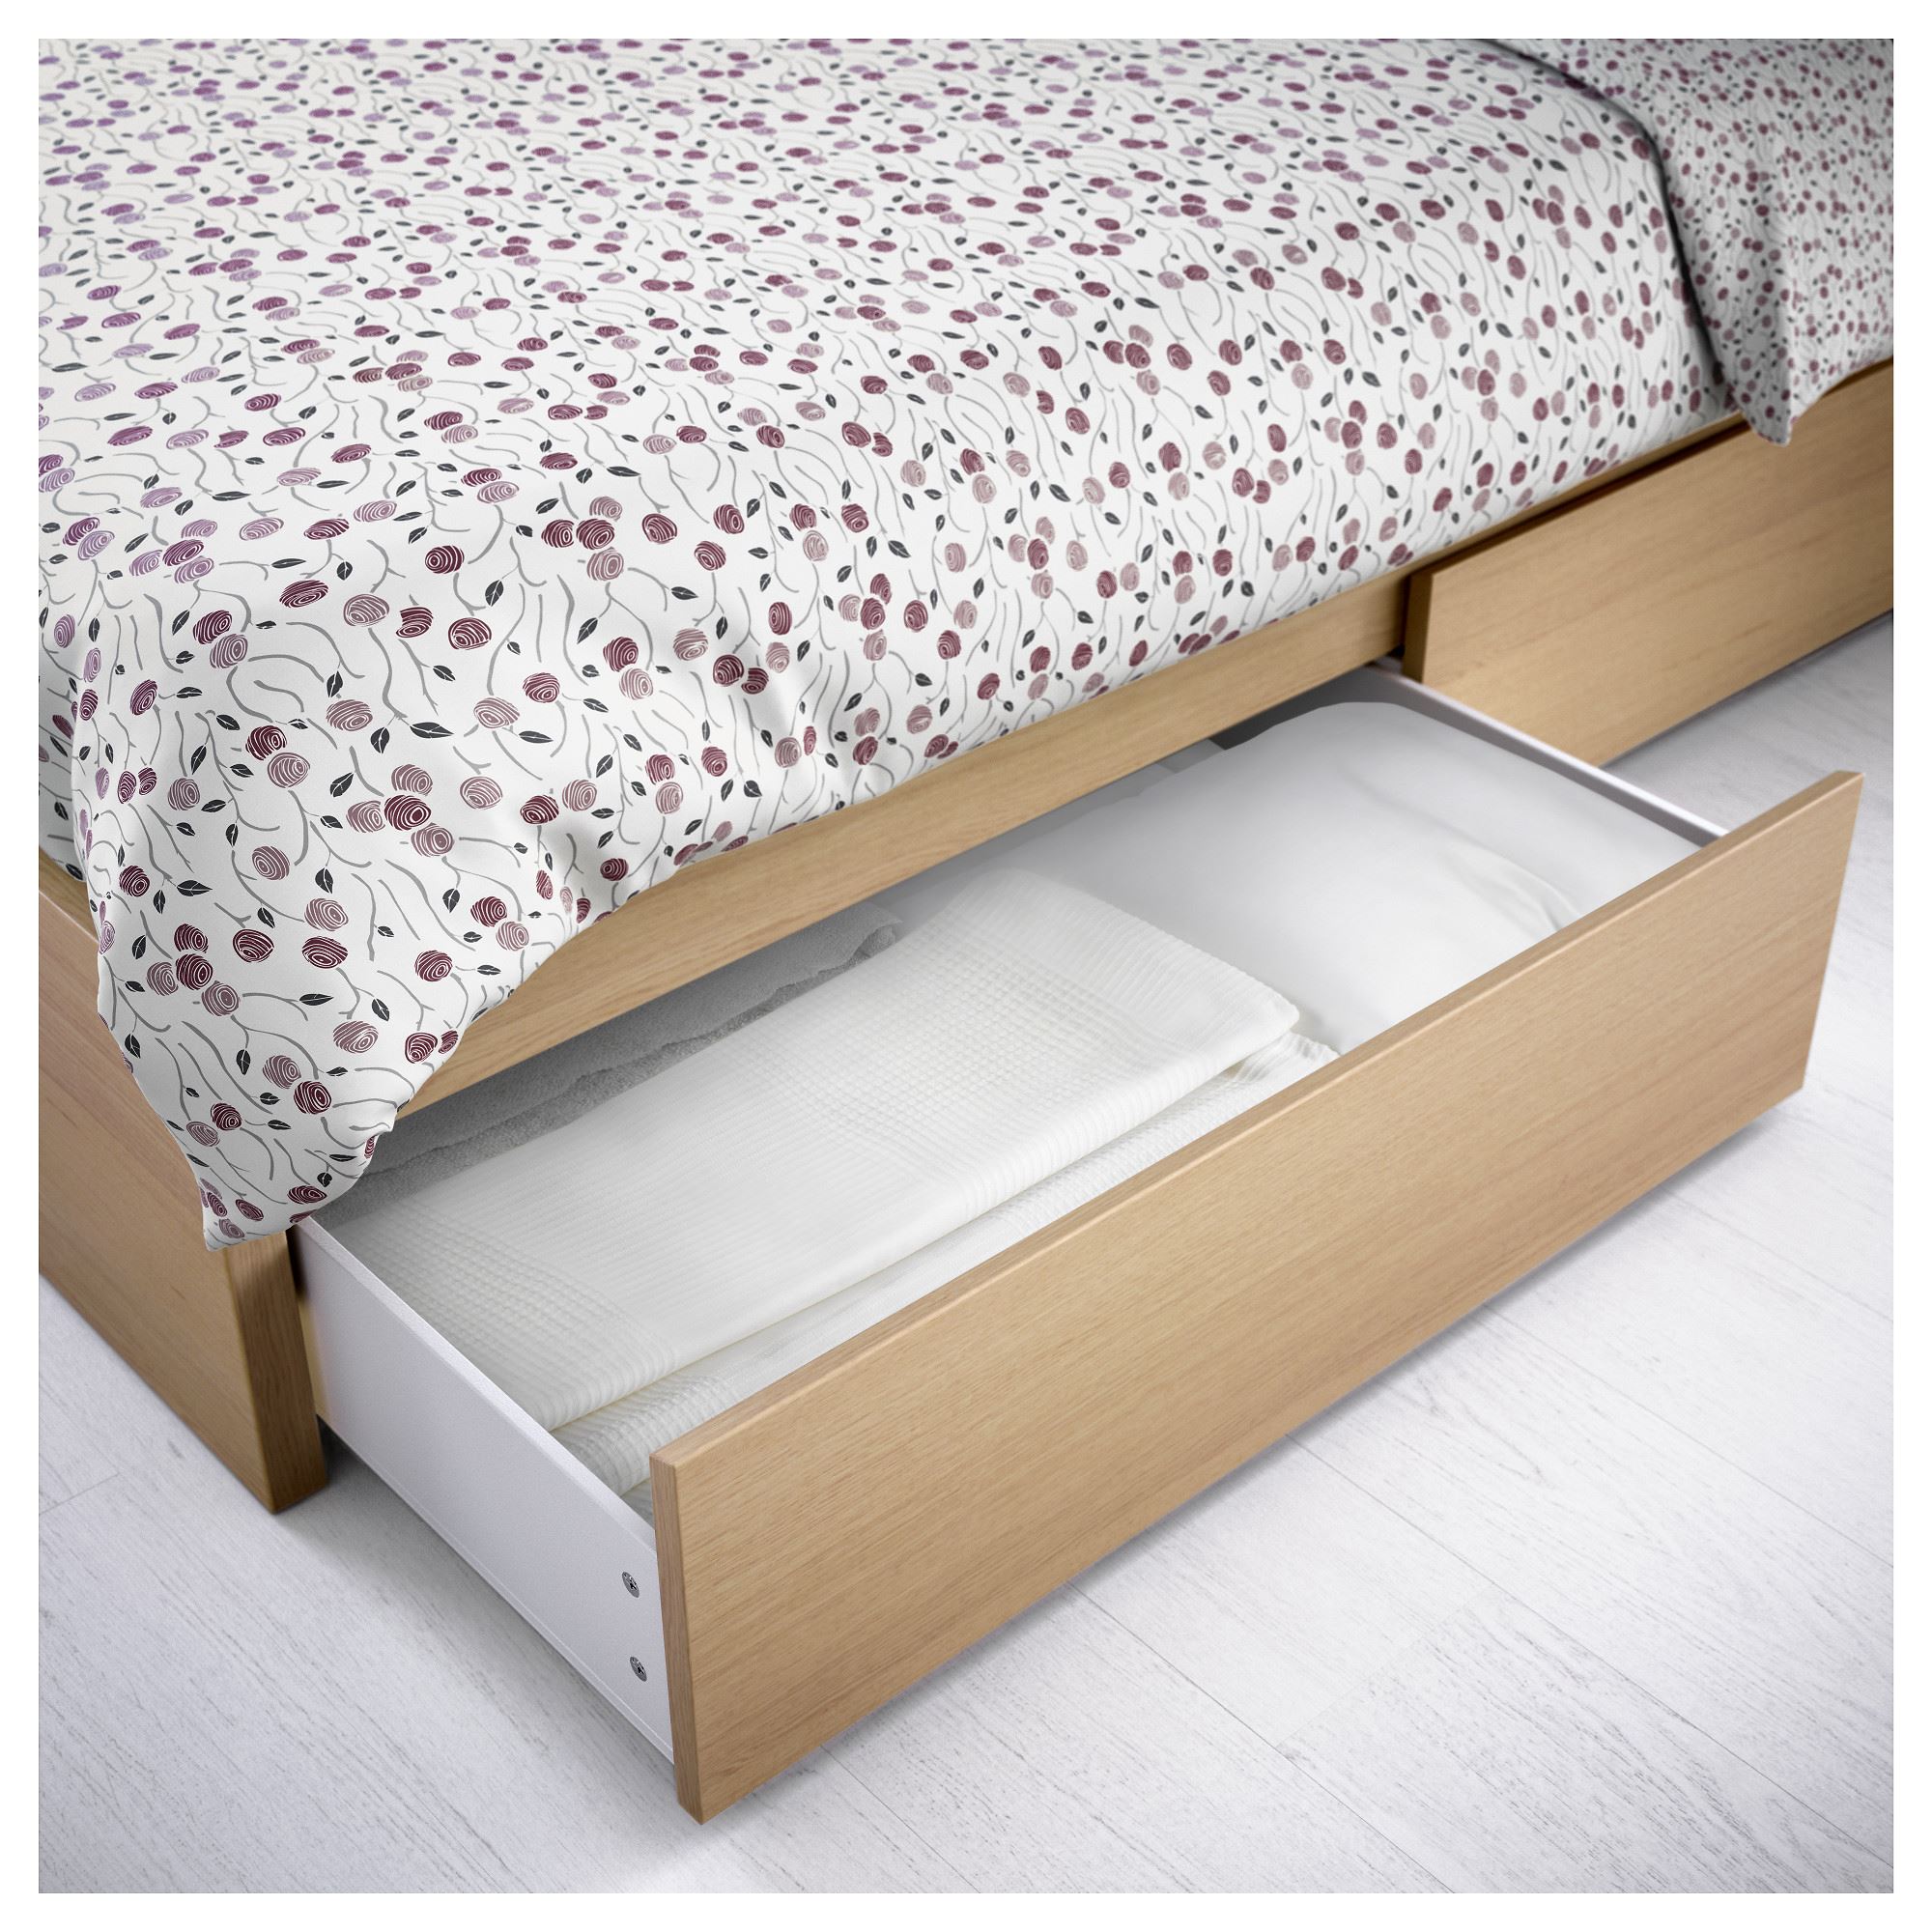 MALM yatak altı eşya kutusu ağartılmış meşe kaplama 100x62x29 cm IKEA